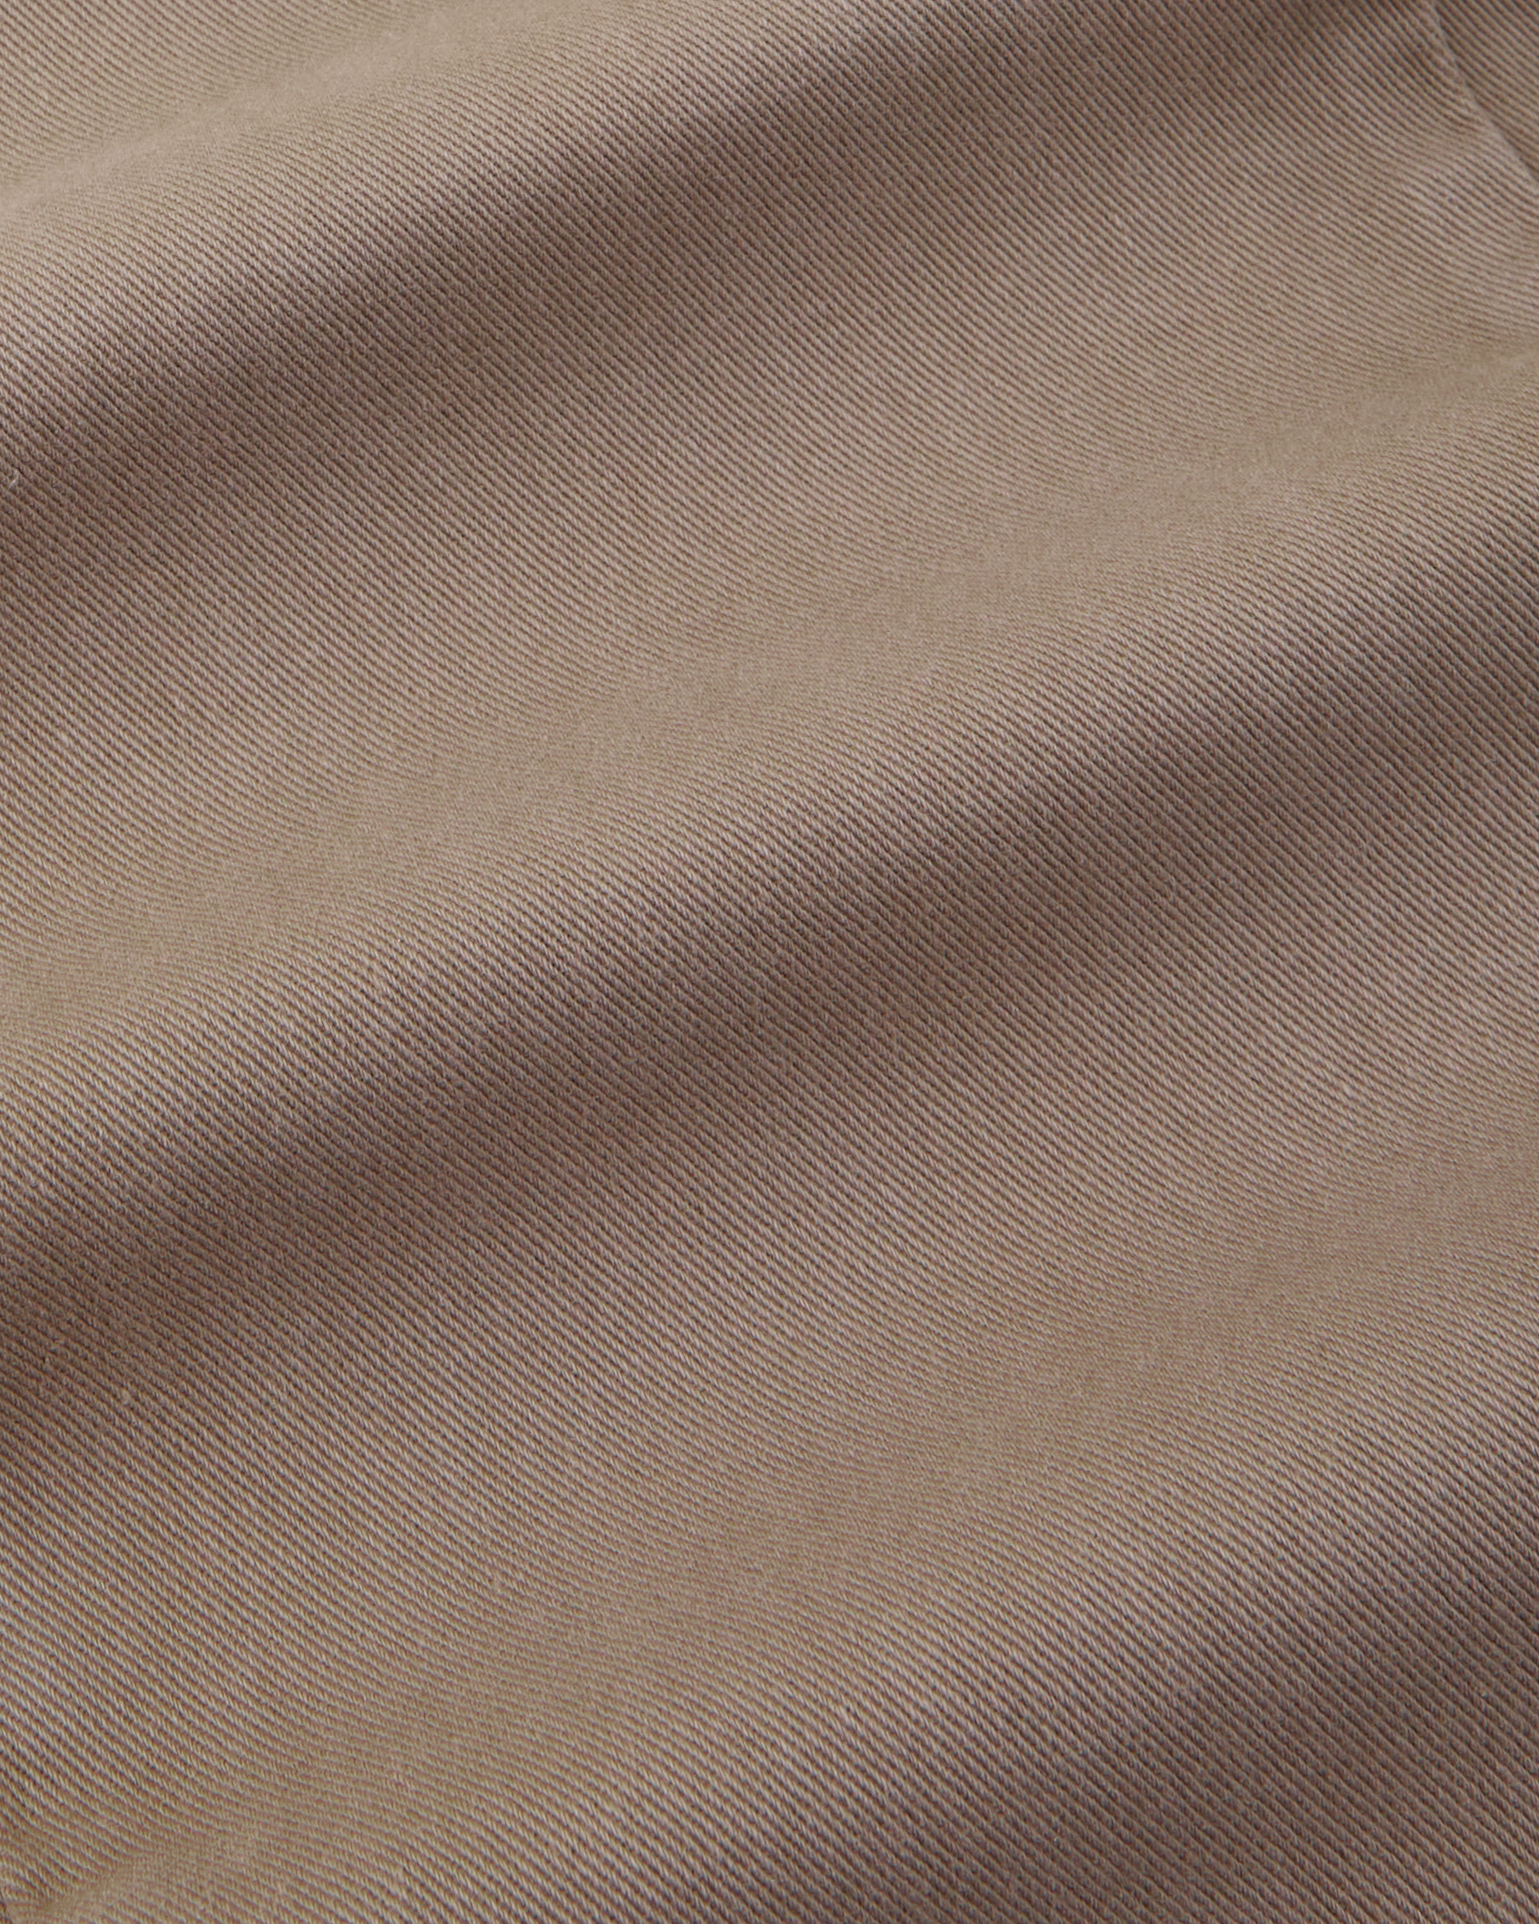 Work Pants in Khaki Grey on fabric detail